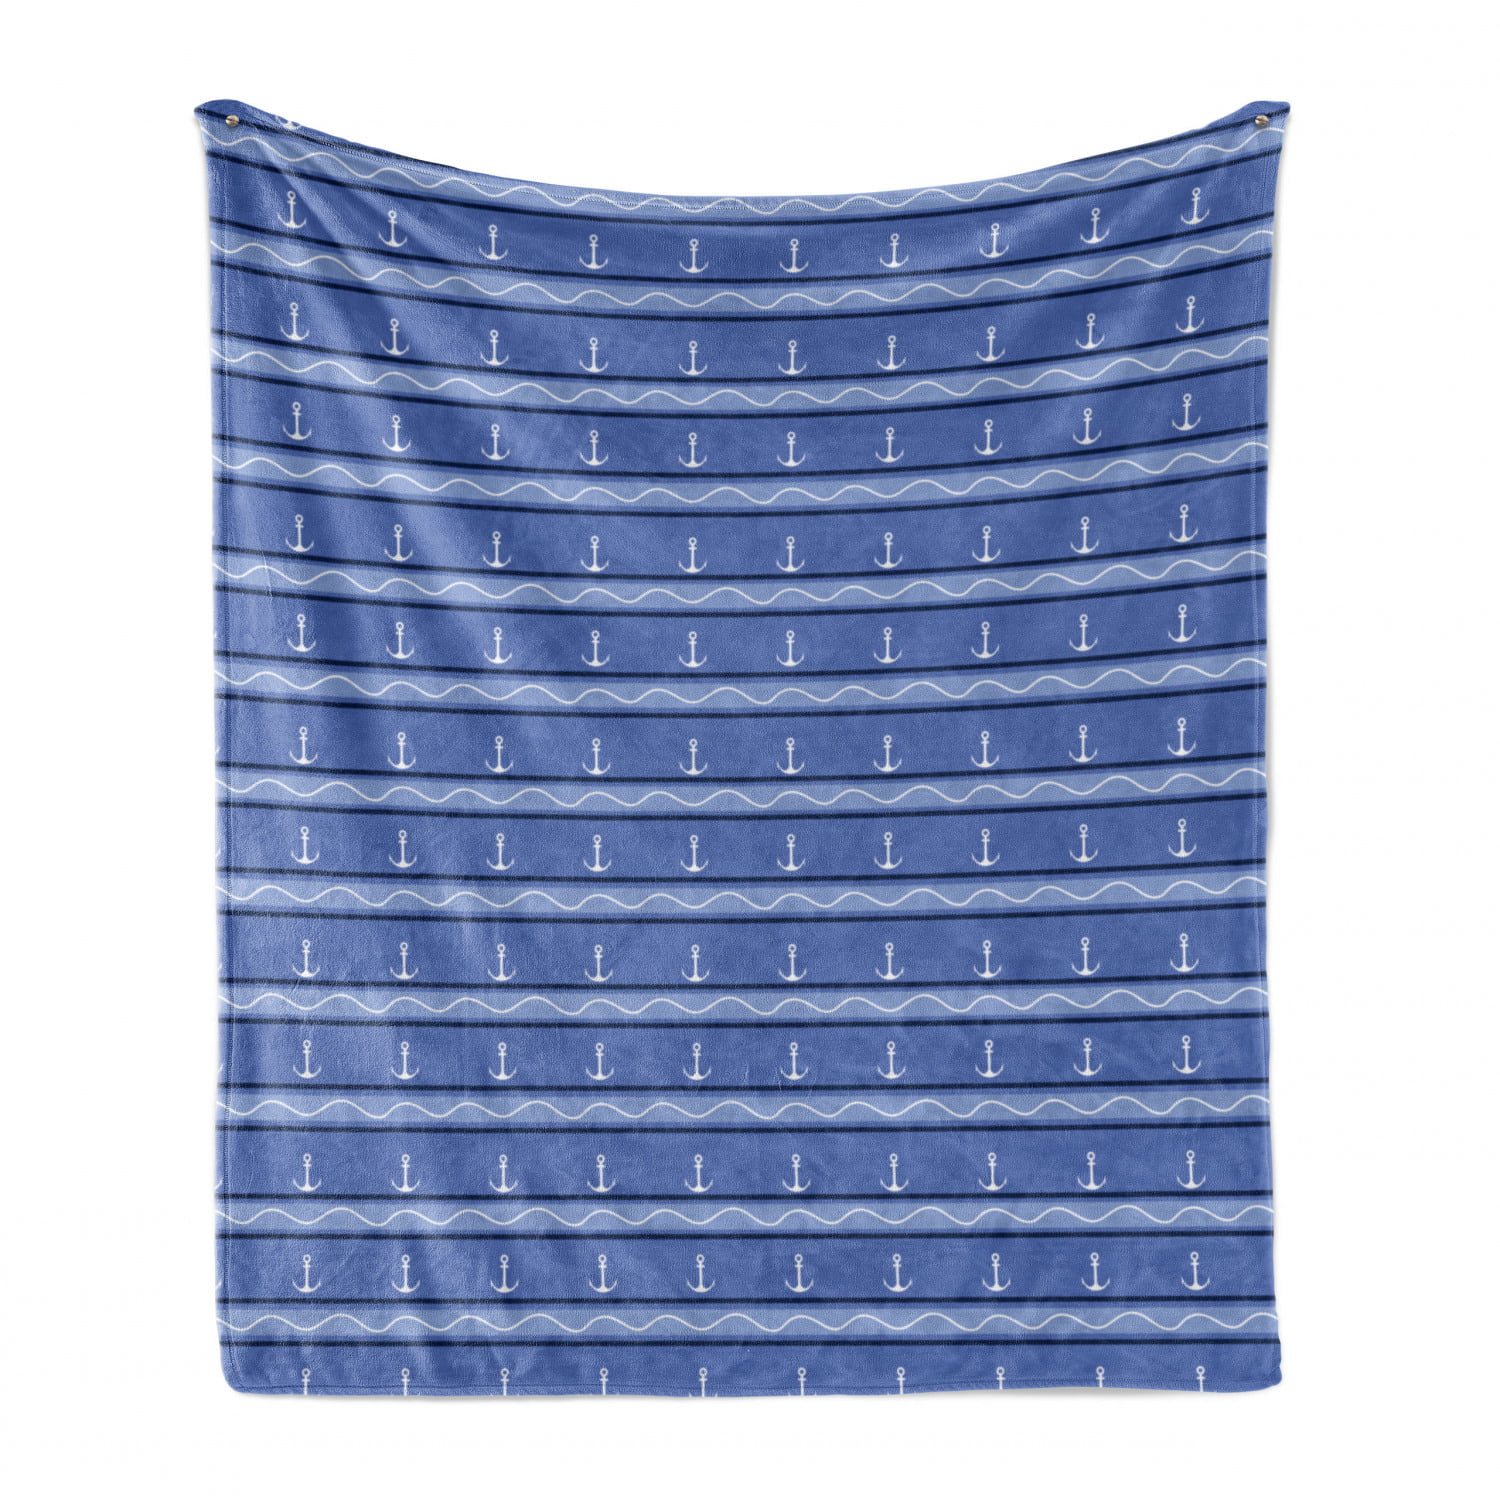 U Life Vintage Turkish Stripe Mandala Blue Soft Fleece Throw Blanket Blankets for Nap Couch Bed Kids Adults 50 x 60 inch